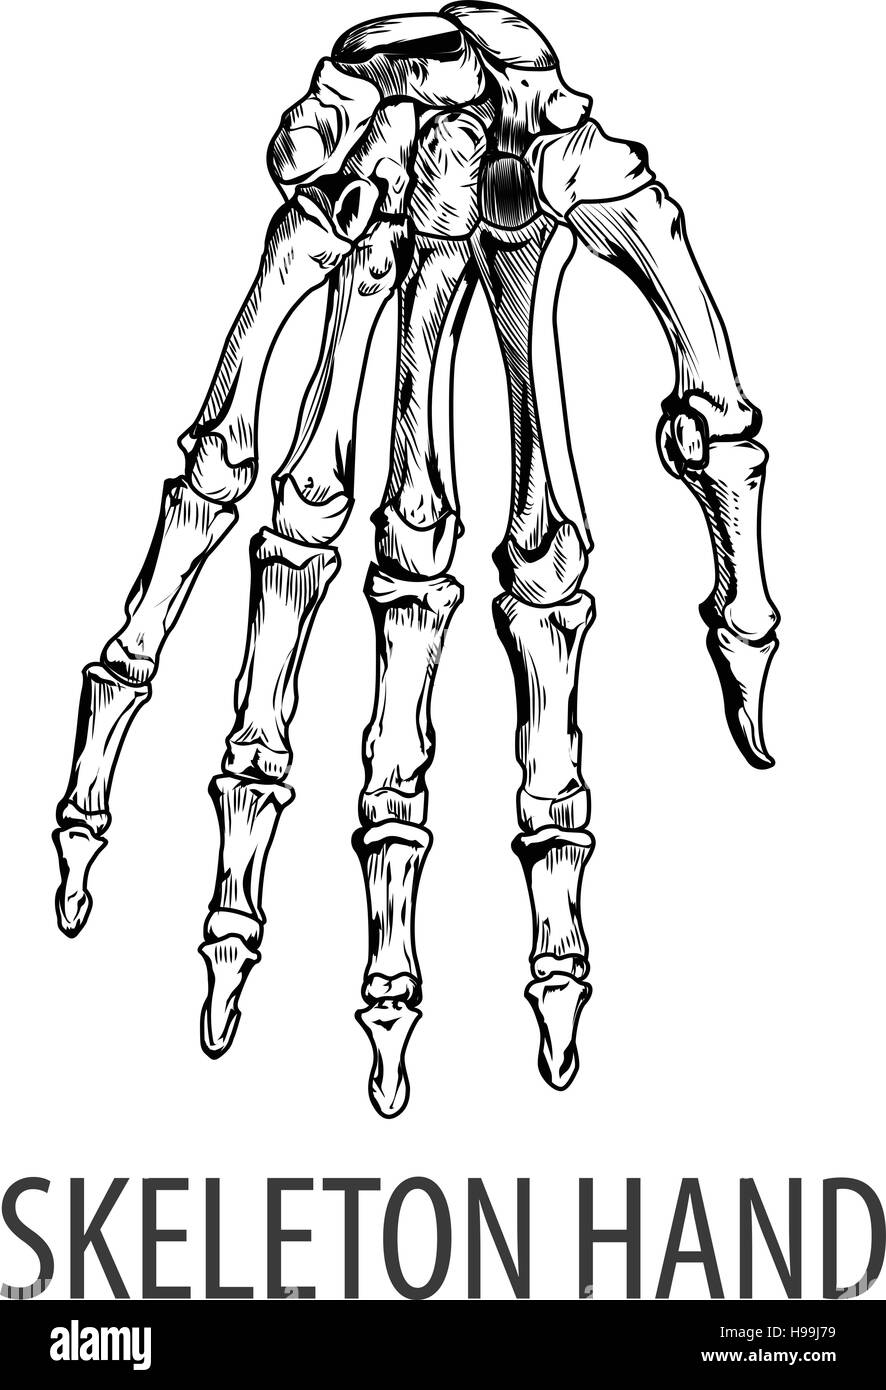 Vectors illustration of Skeleton hand Stock Vector